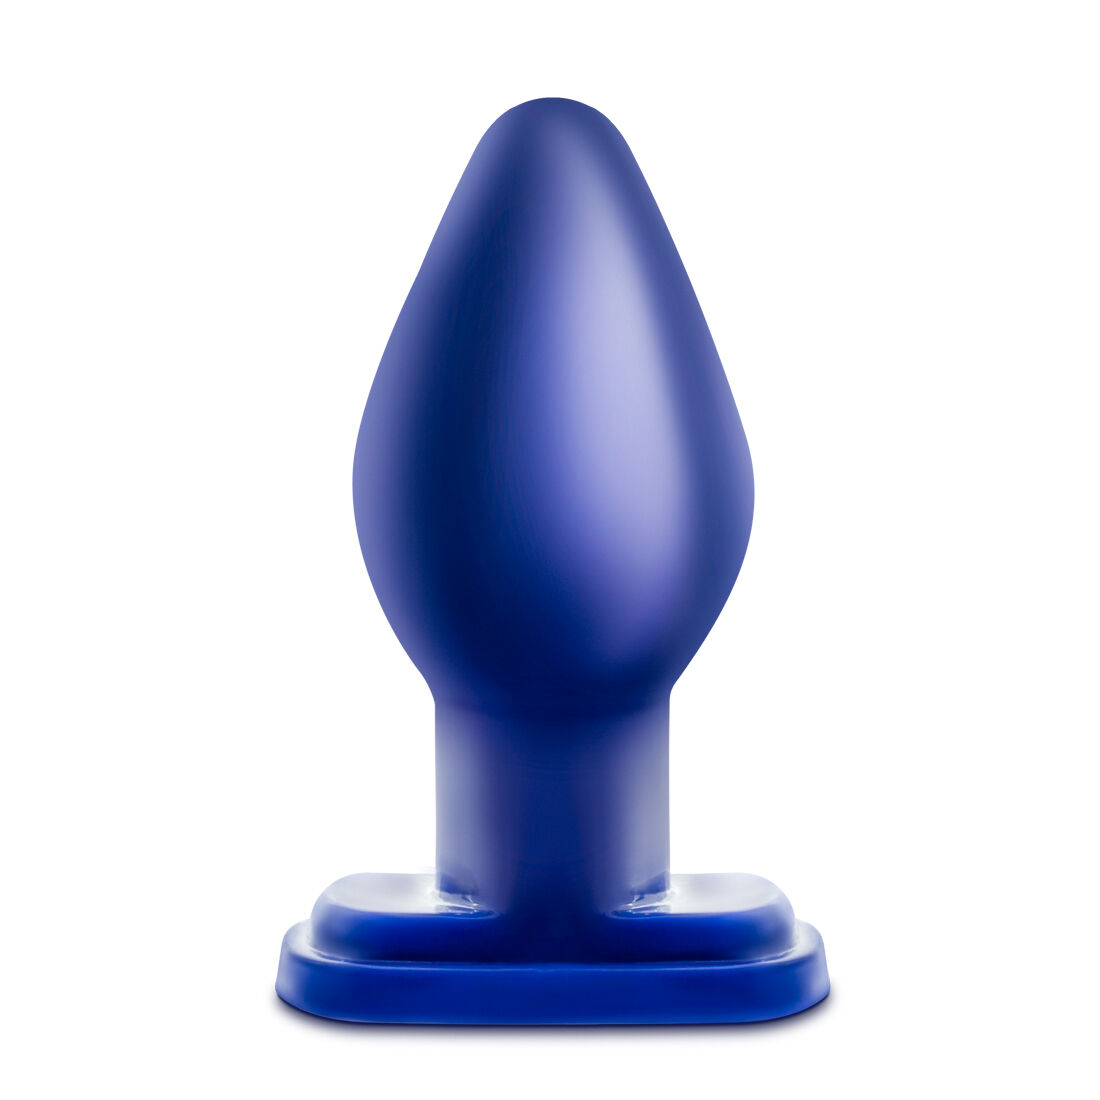 Blush Performance Butt Plug #2 Blue - Anal Probe Sex Toy